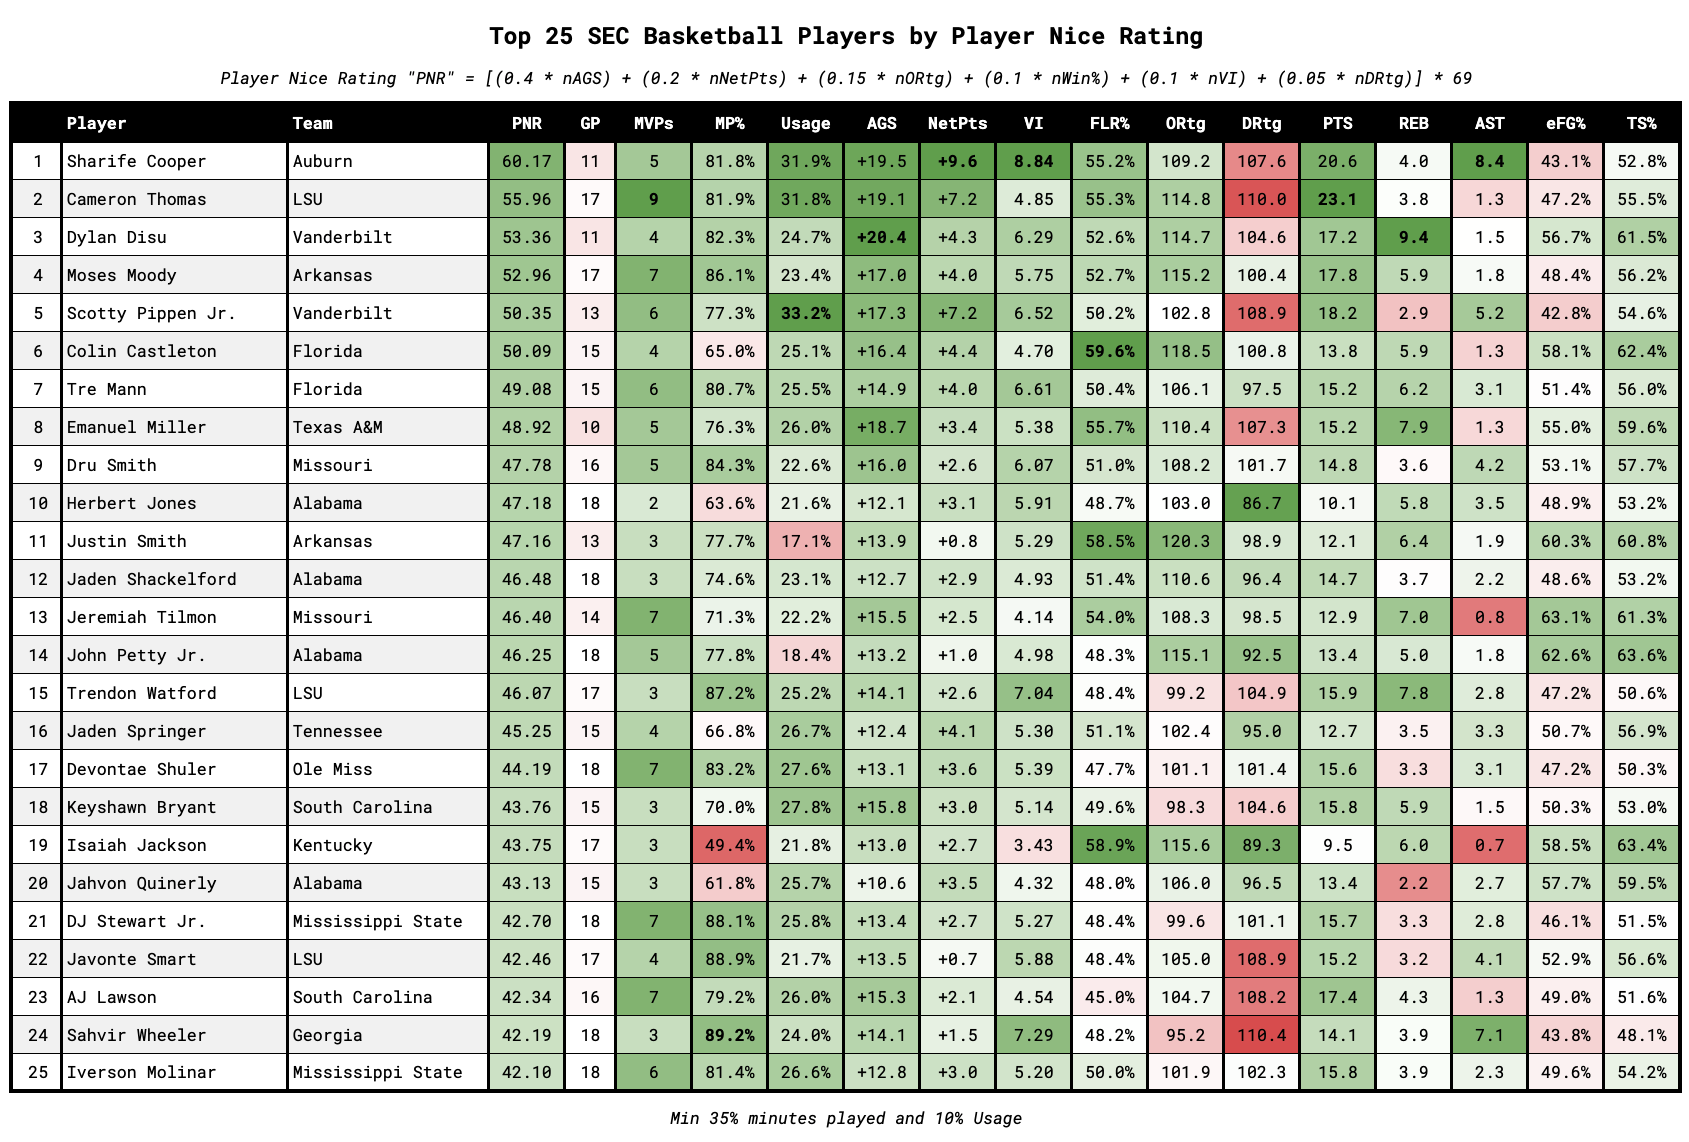 Top 25 SEC Basketball Players by Jacob Varner's Player Nice Rating